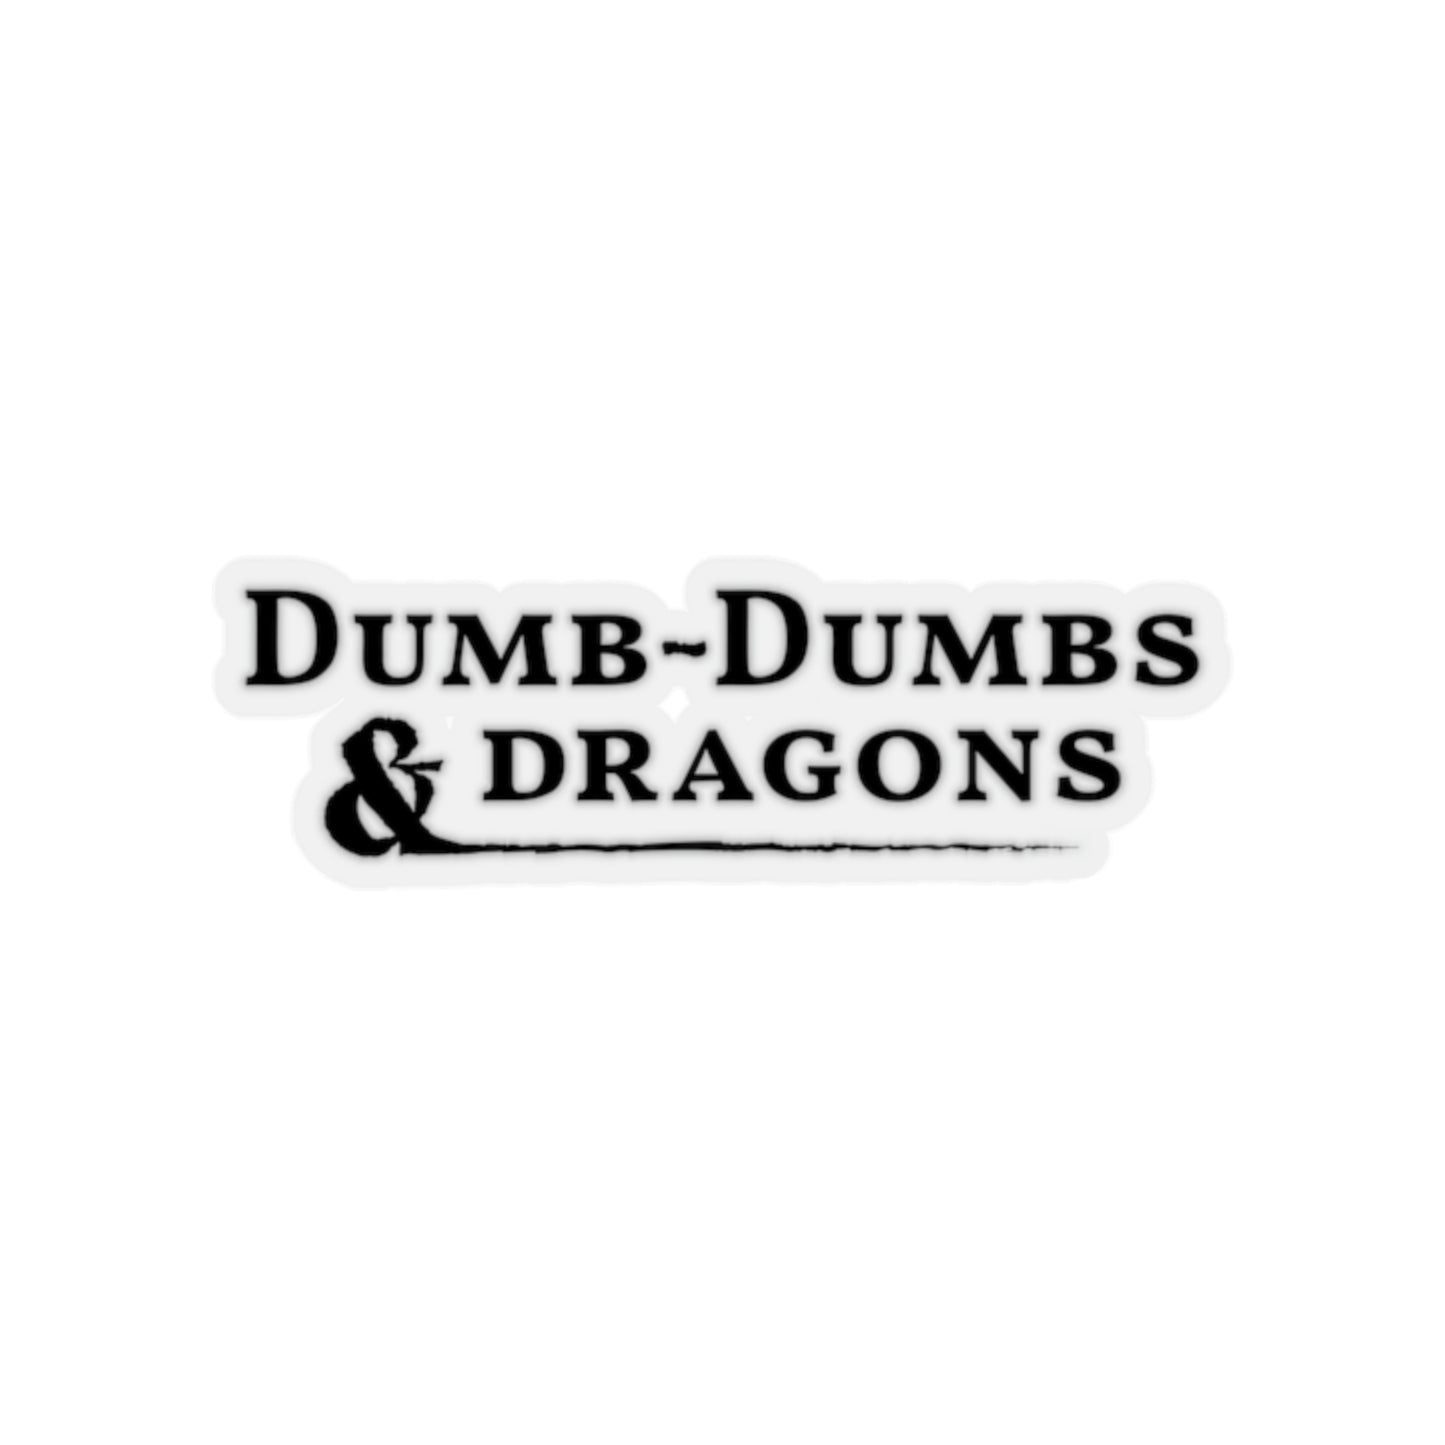 Dumb-Dumbs & Dragons: Logo Sticker